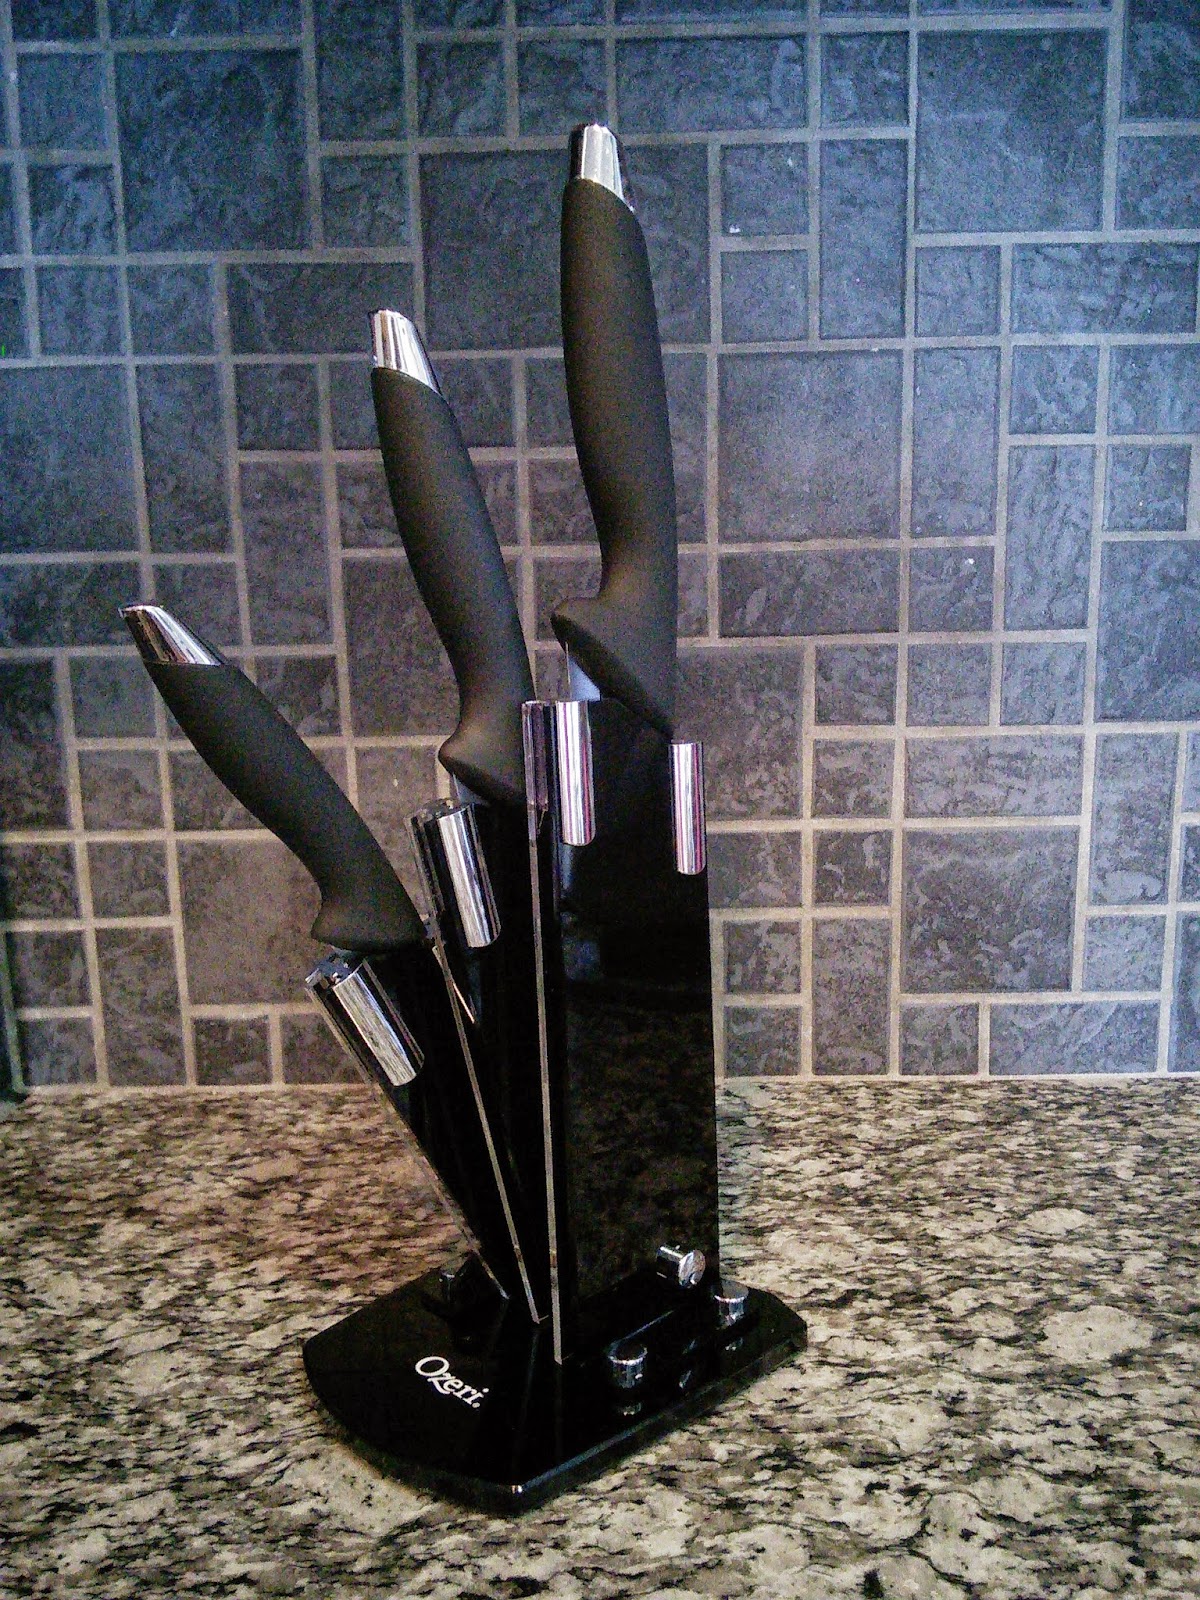 Ozeri Elite Chef II 12-Piece Ceramic Knife Set - Black Handle